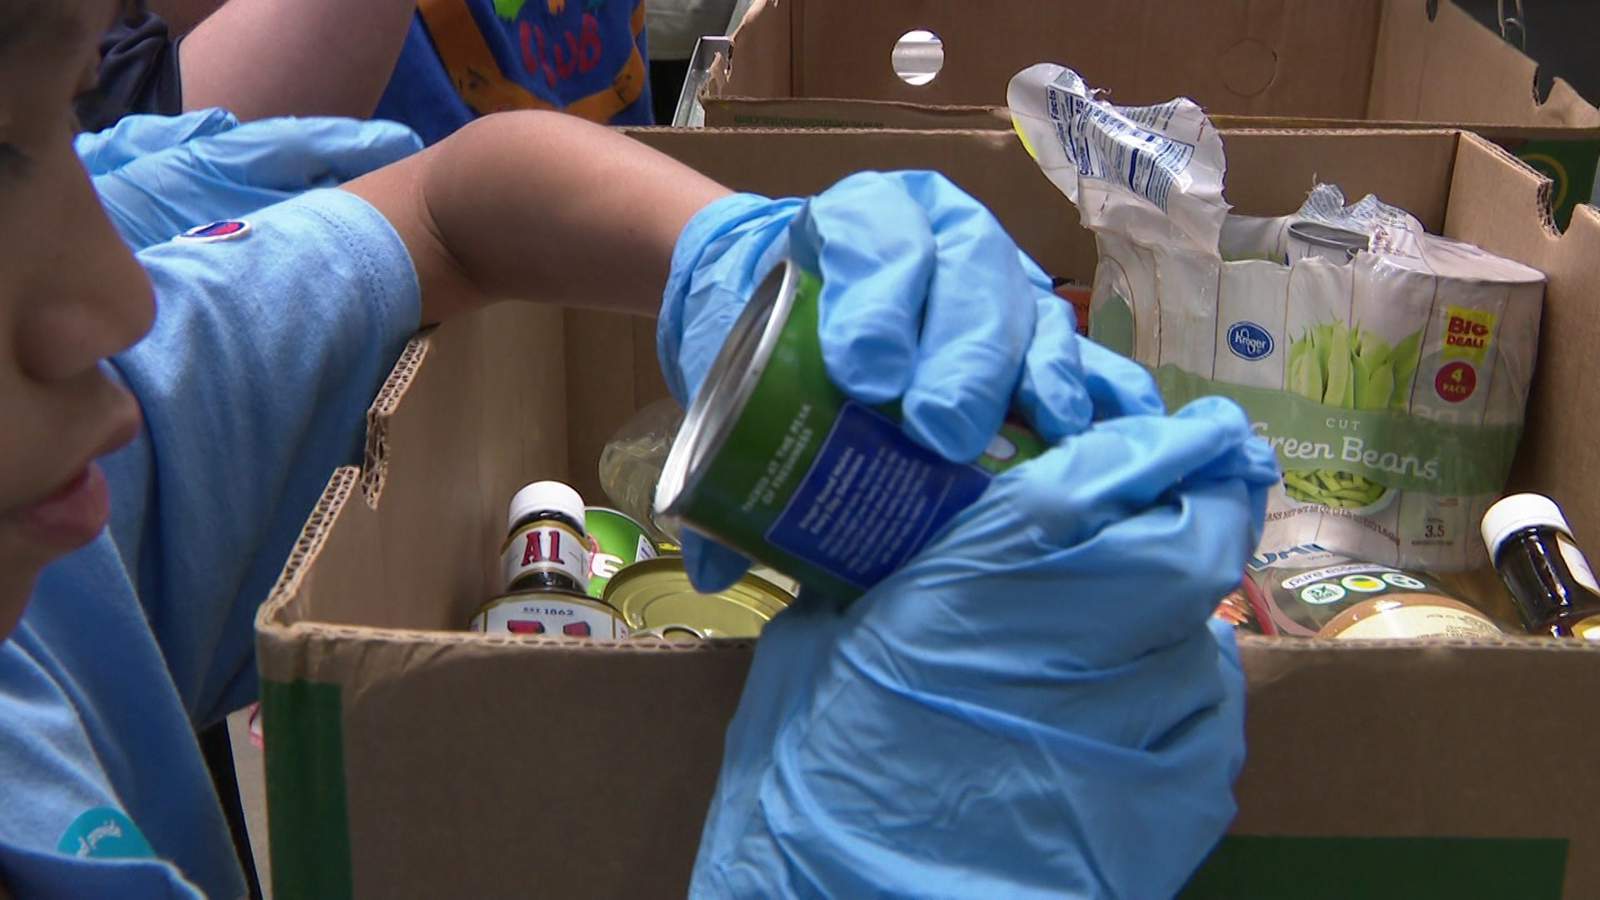 Houston Food Bank preparing quarantine food kits due to area coronavirus cases, asking for volunteers